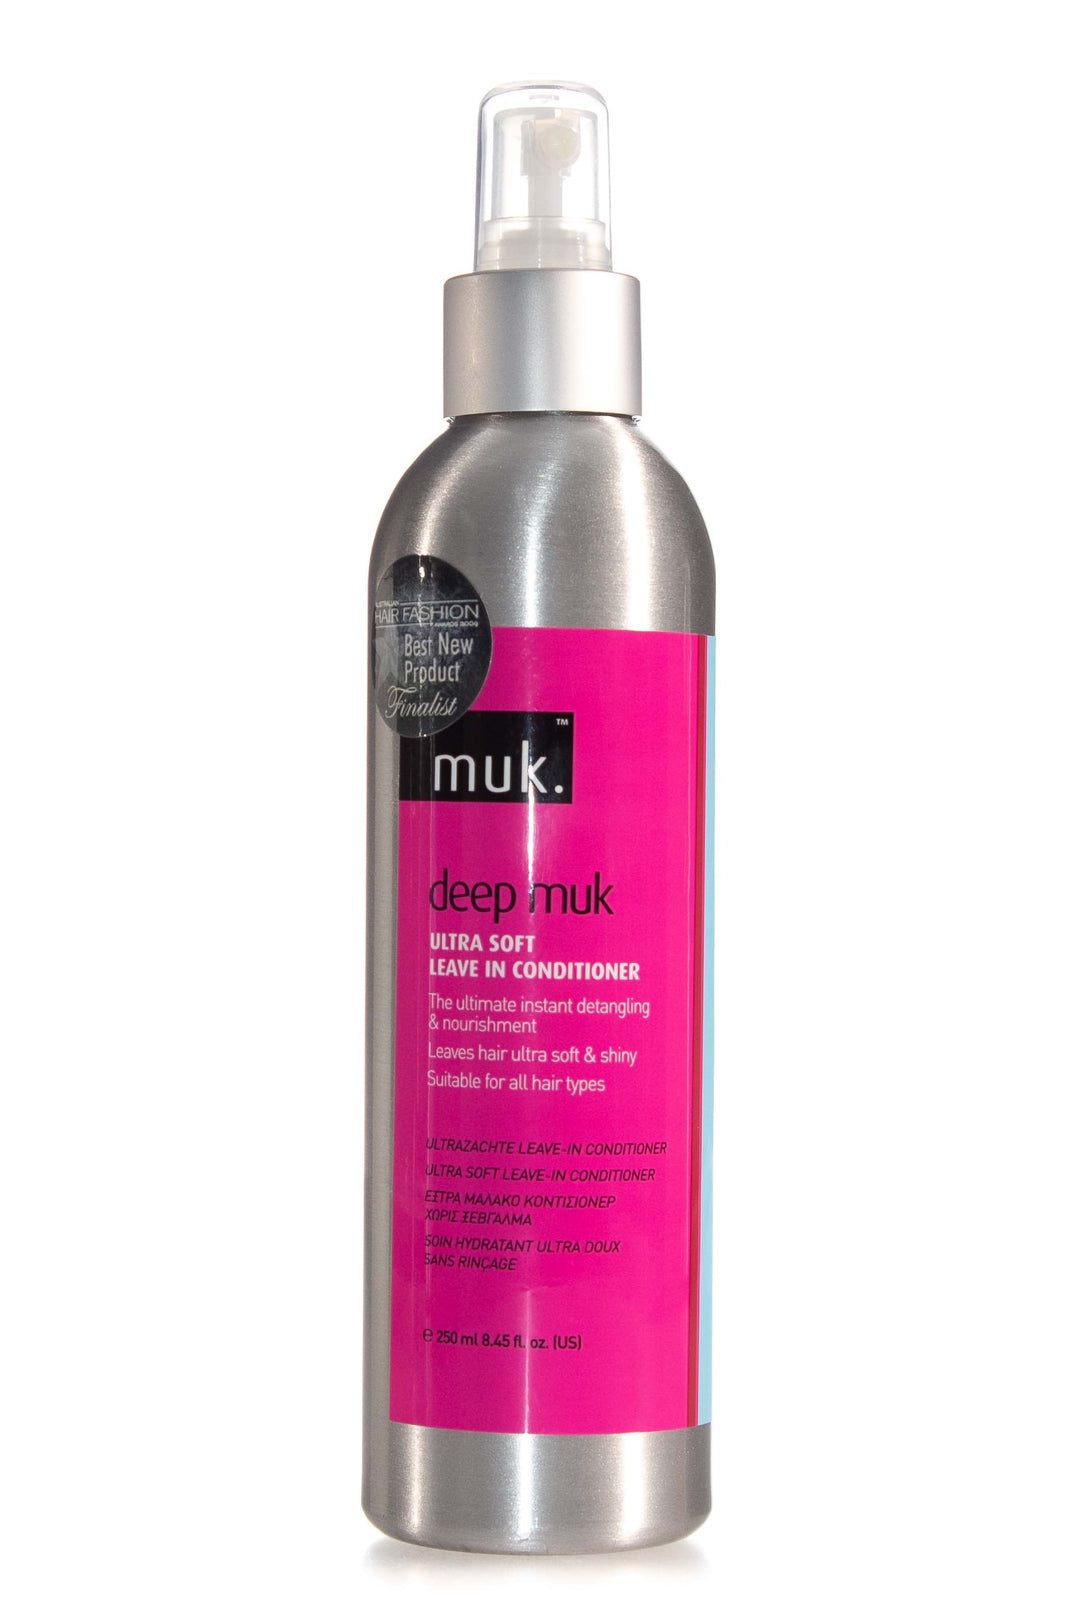 muk-deep-muk-ultra-soft-Hair-conditioner-250ml